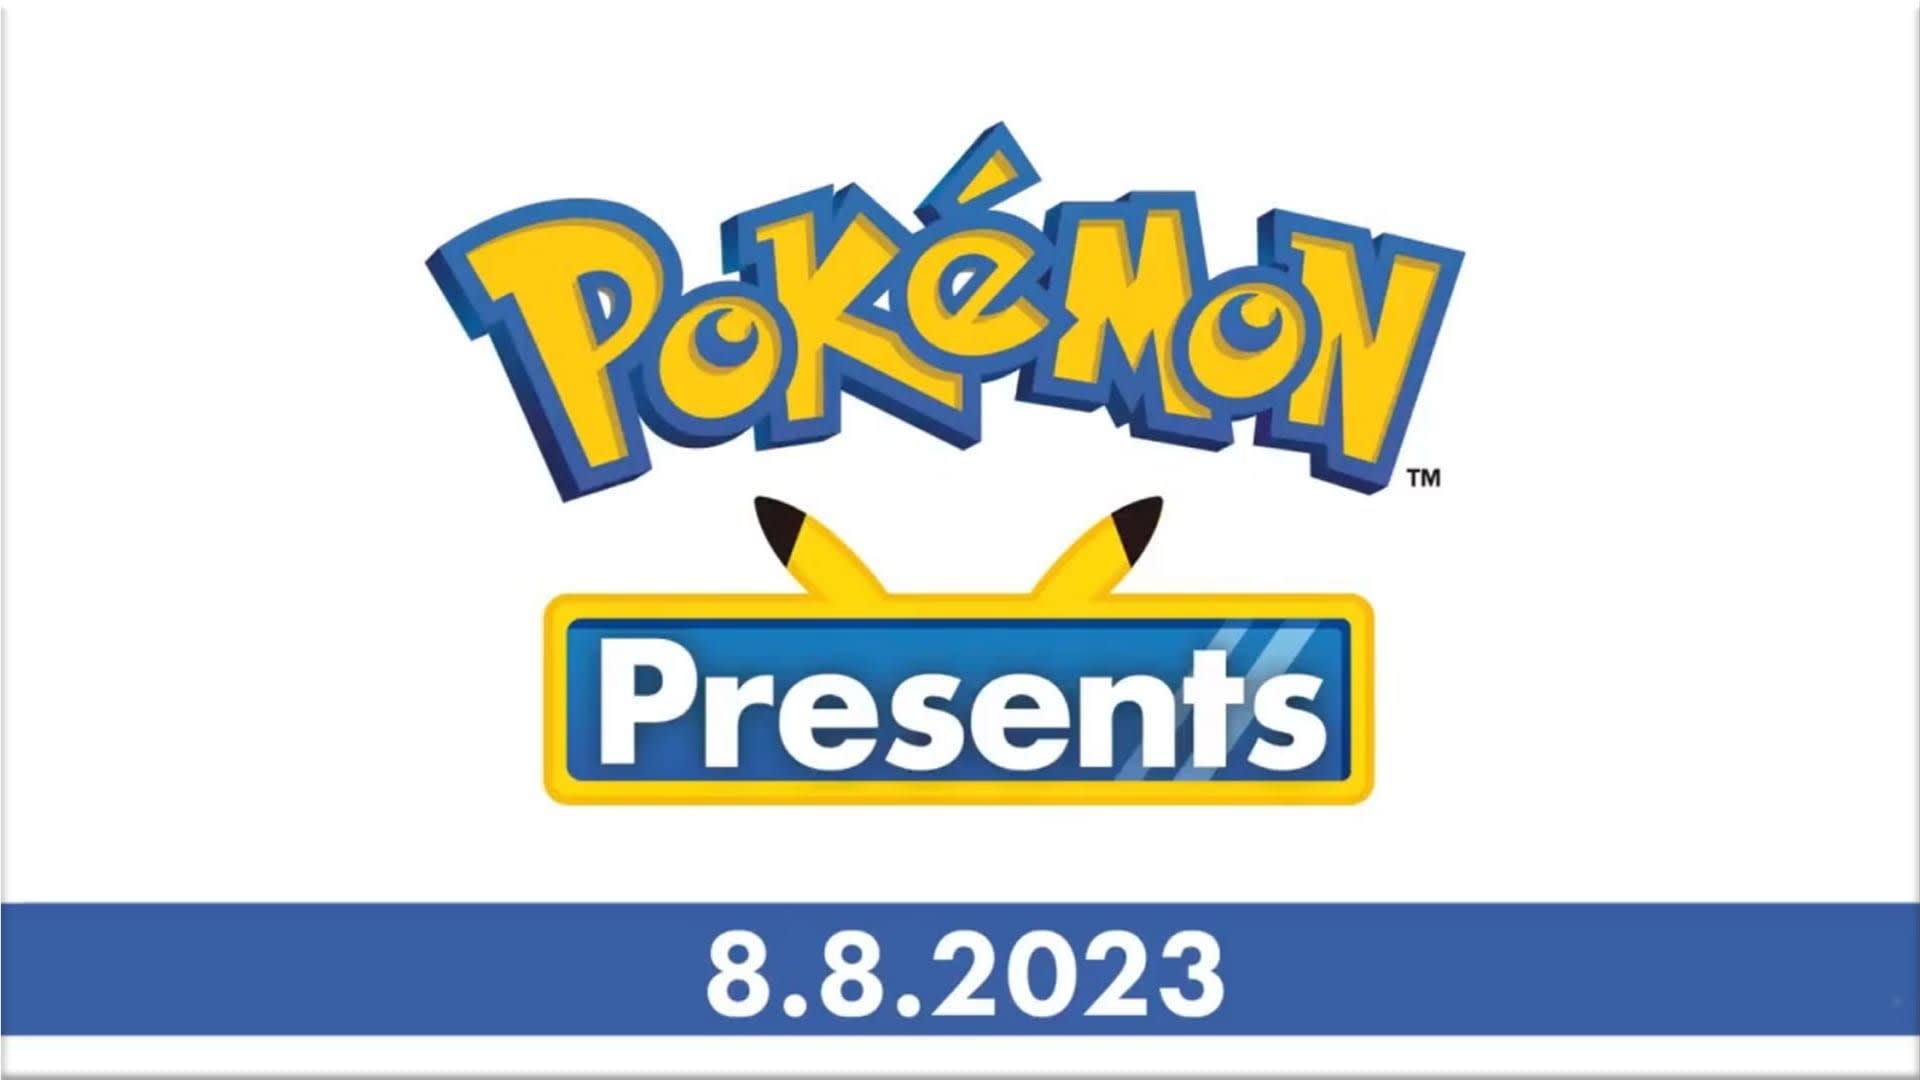 Pokémon reveals new entertainment experiences and updates Pokémon Presents Hero